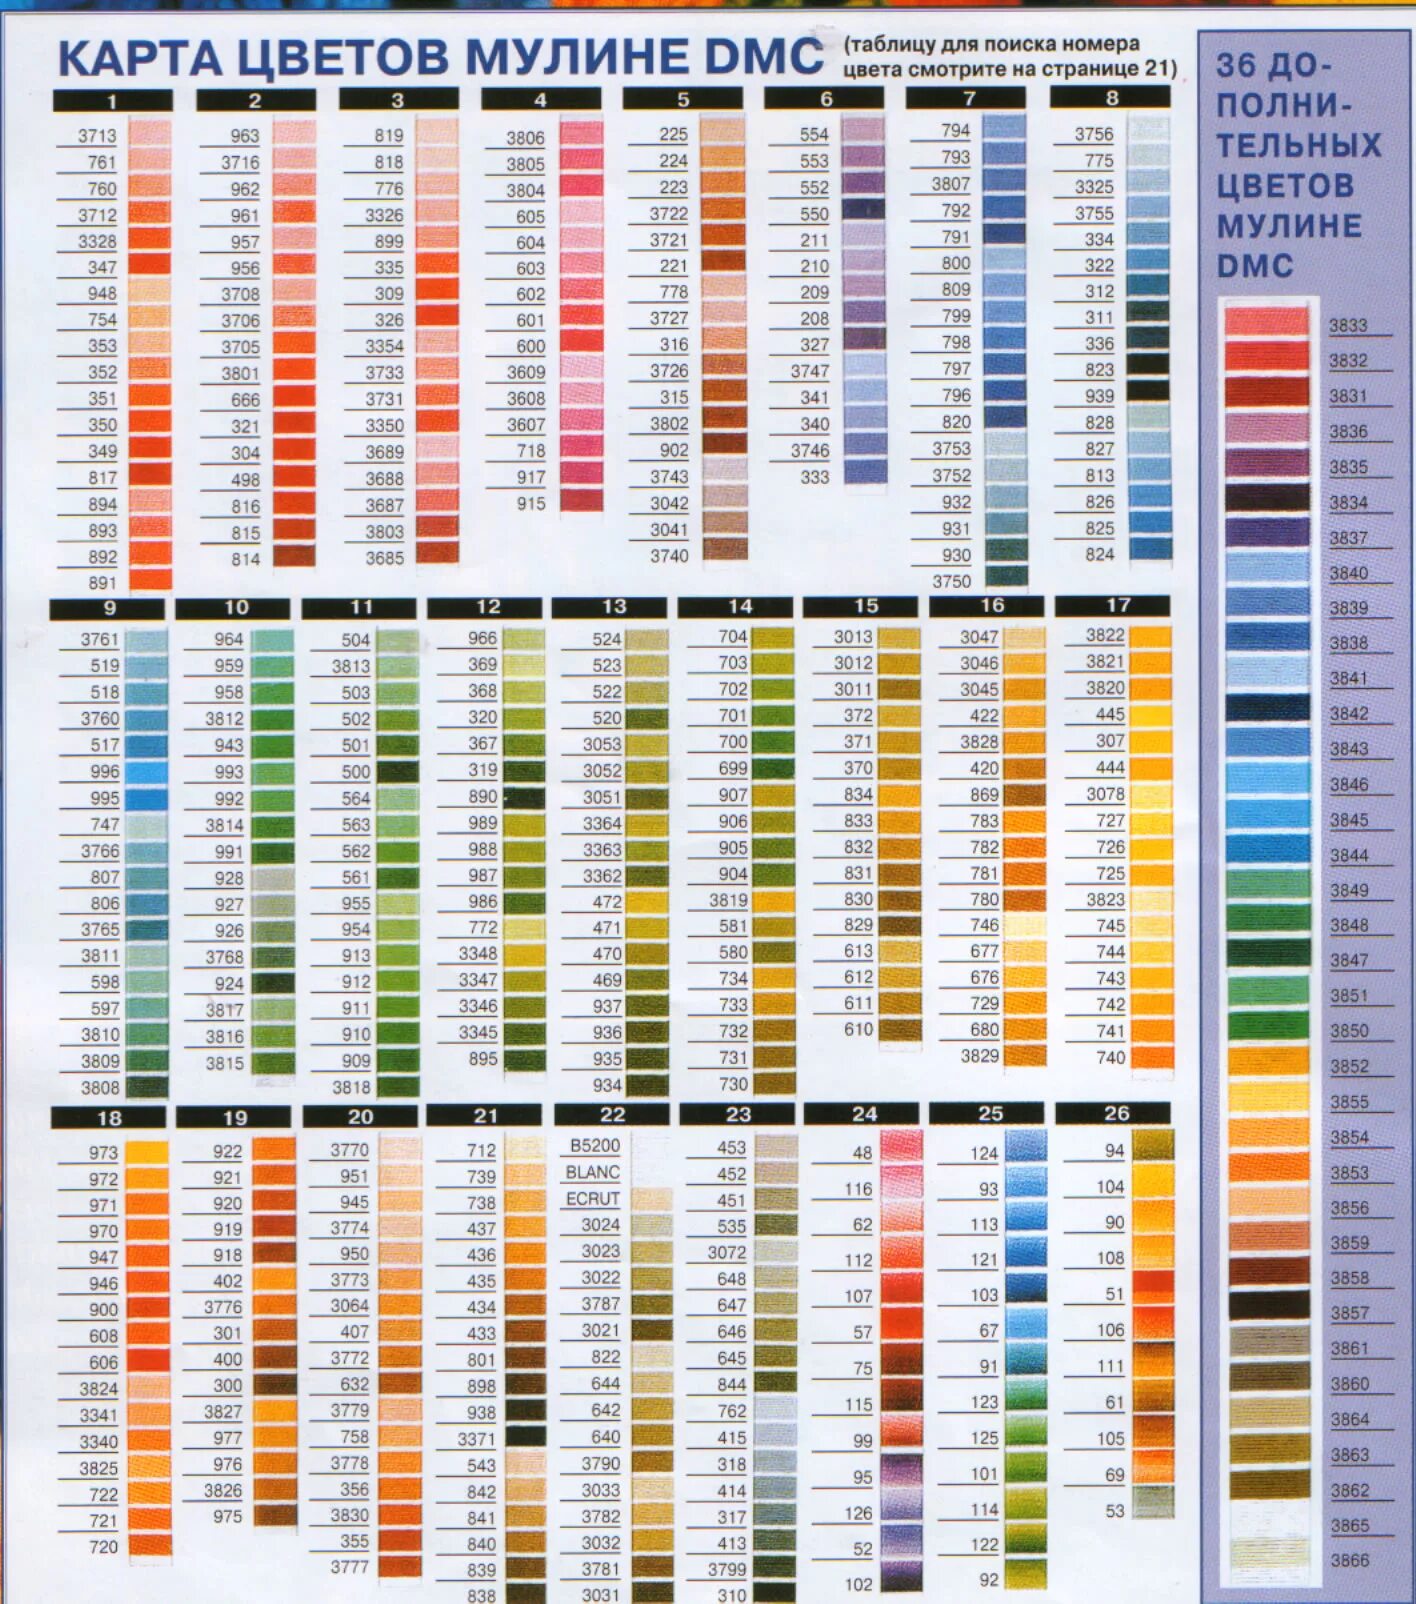 Таблица цветов ниток мулине СХС. Цветовая палитра мулине ДМС. Нитки мулине DMC таблица цветов. Мулине Gamma 0011 (гамма).